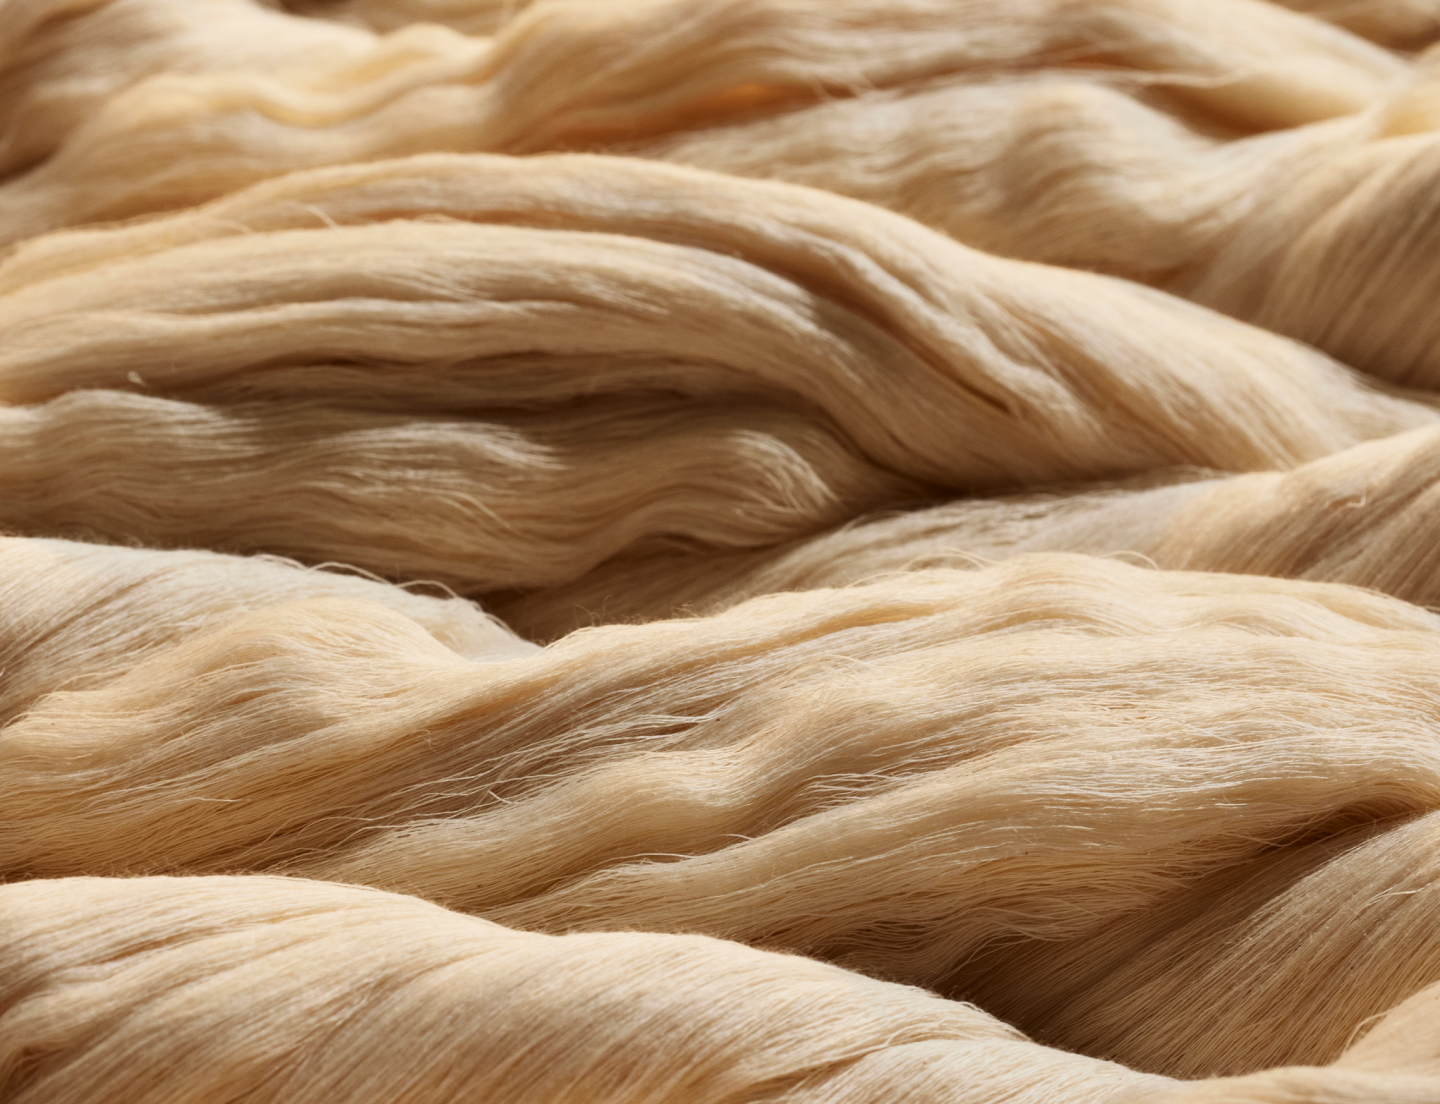 A detail close up of organic cotton yarns